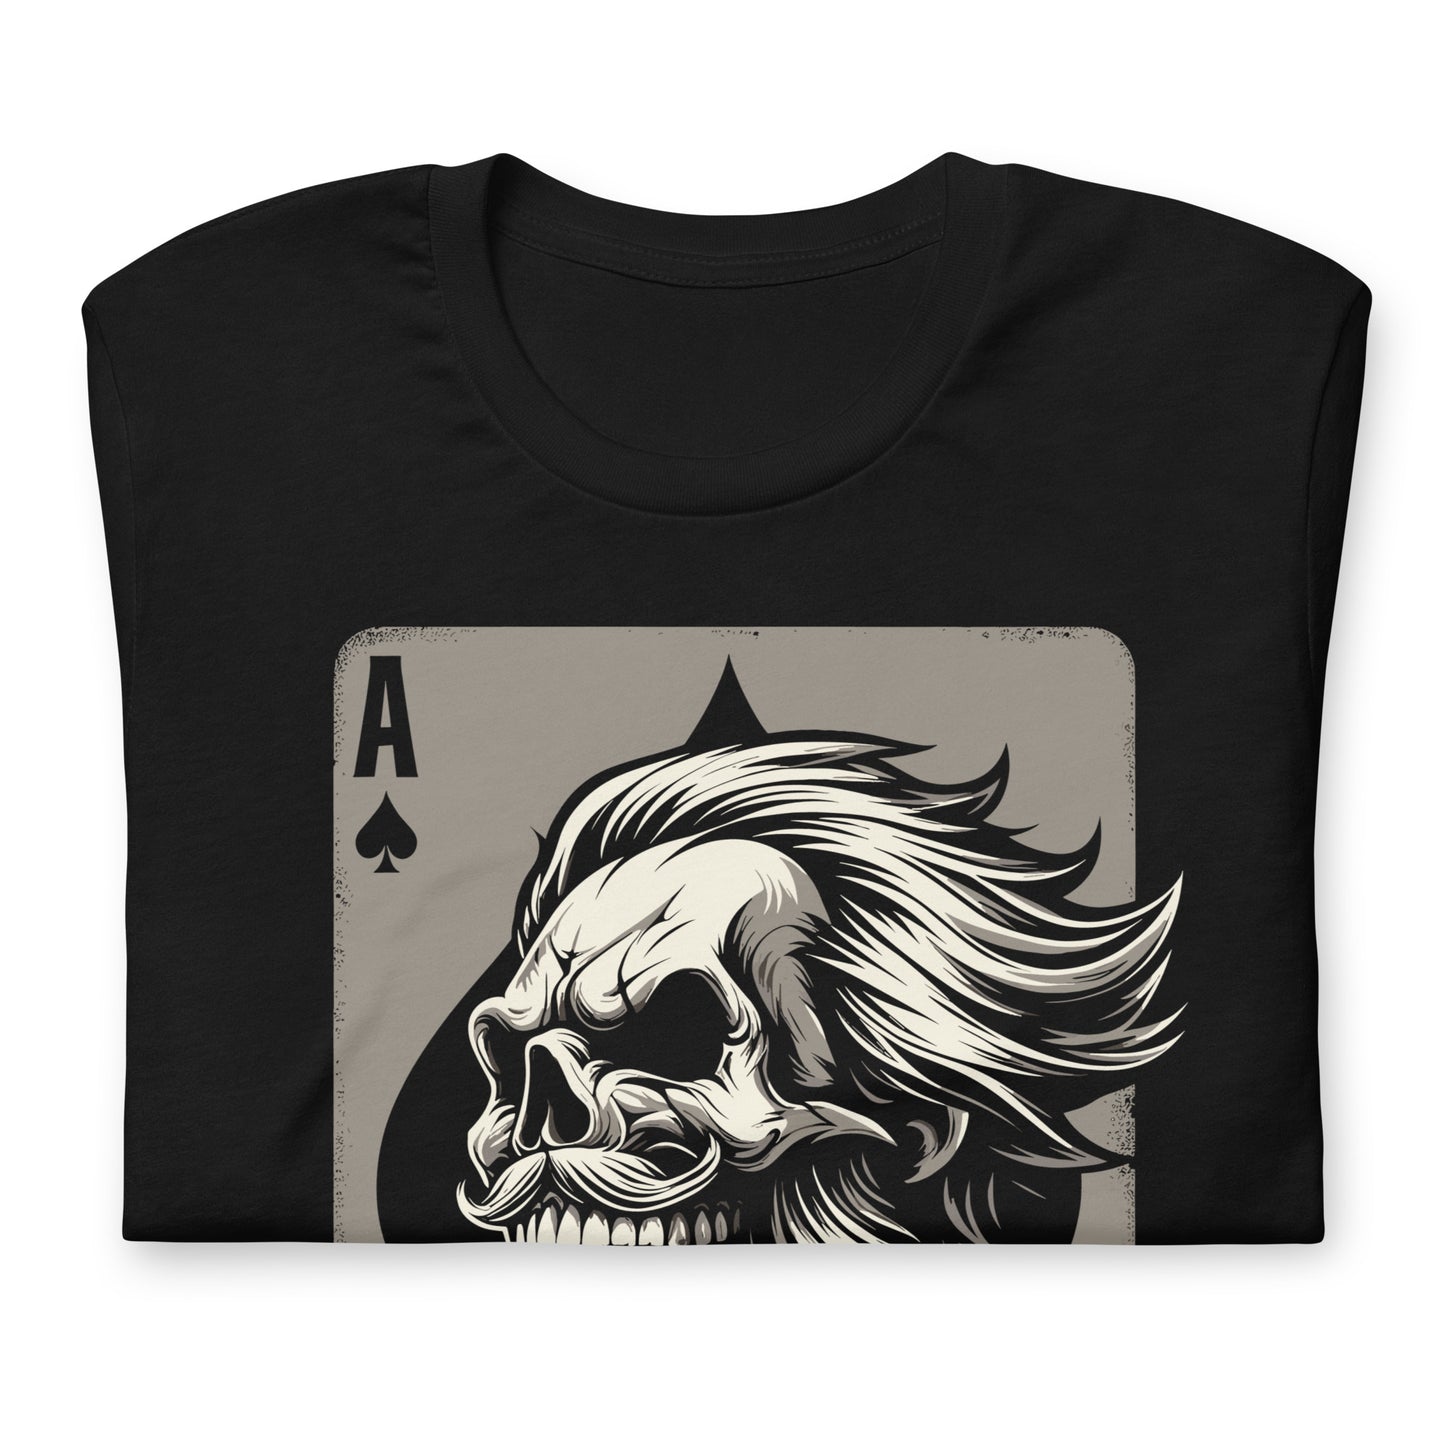 Joker playing card t-shirt